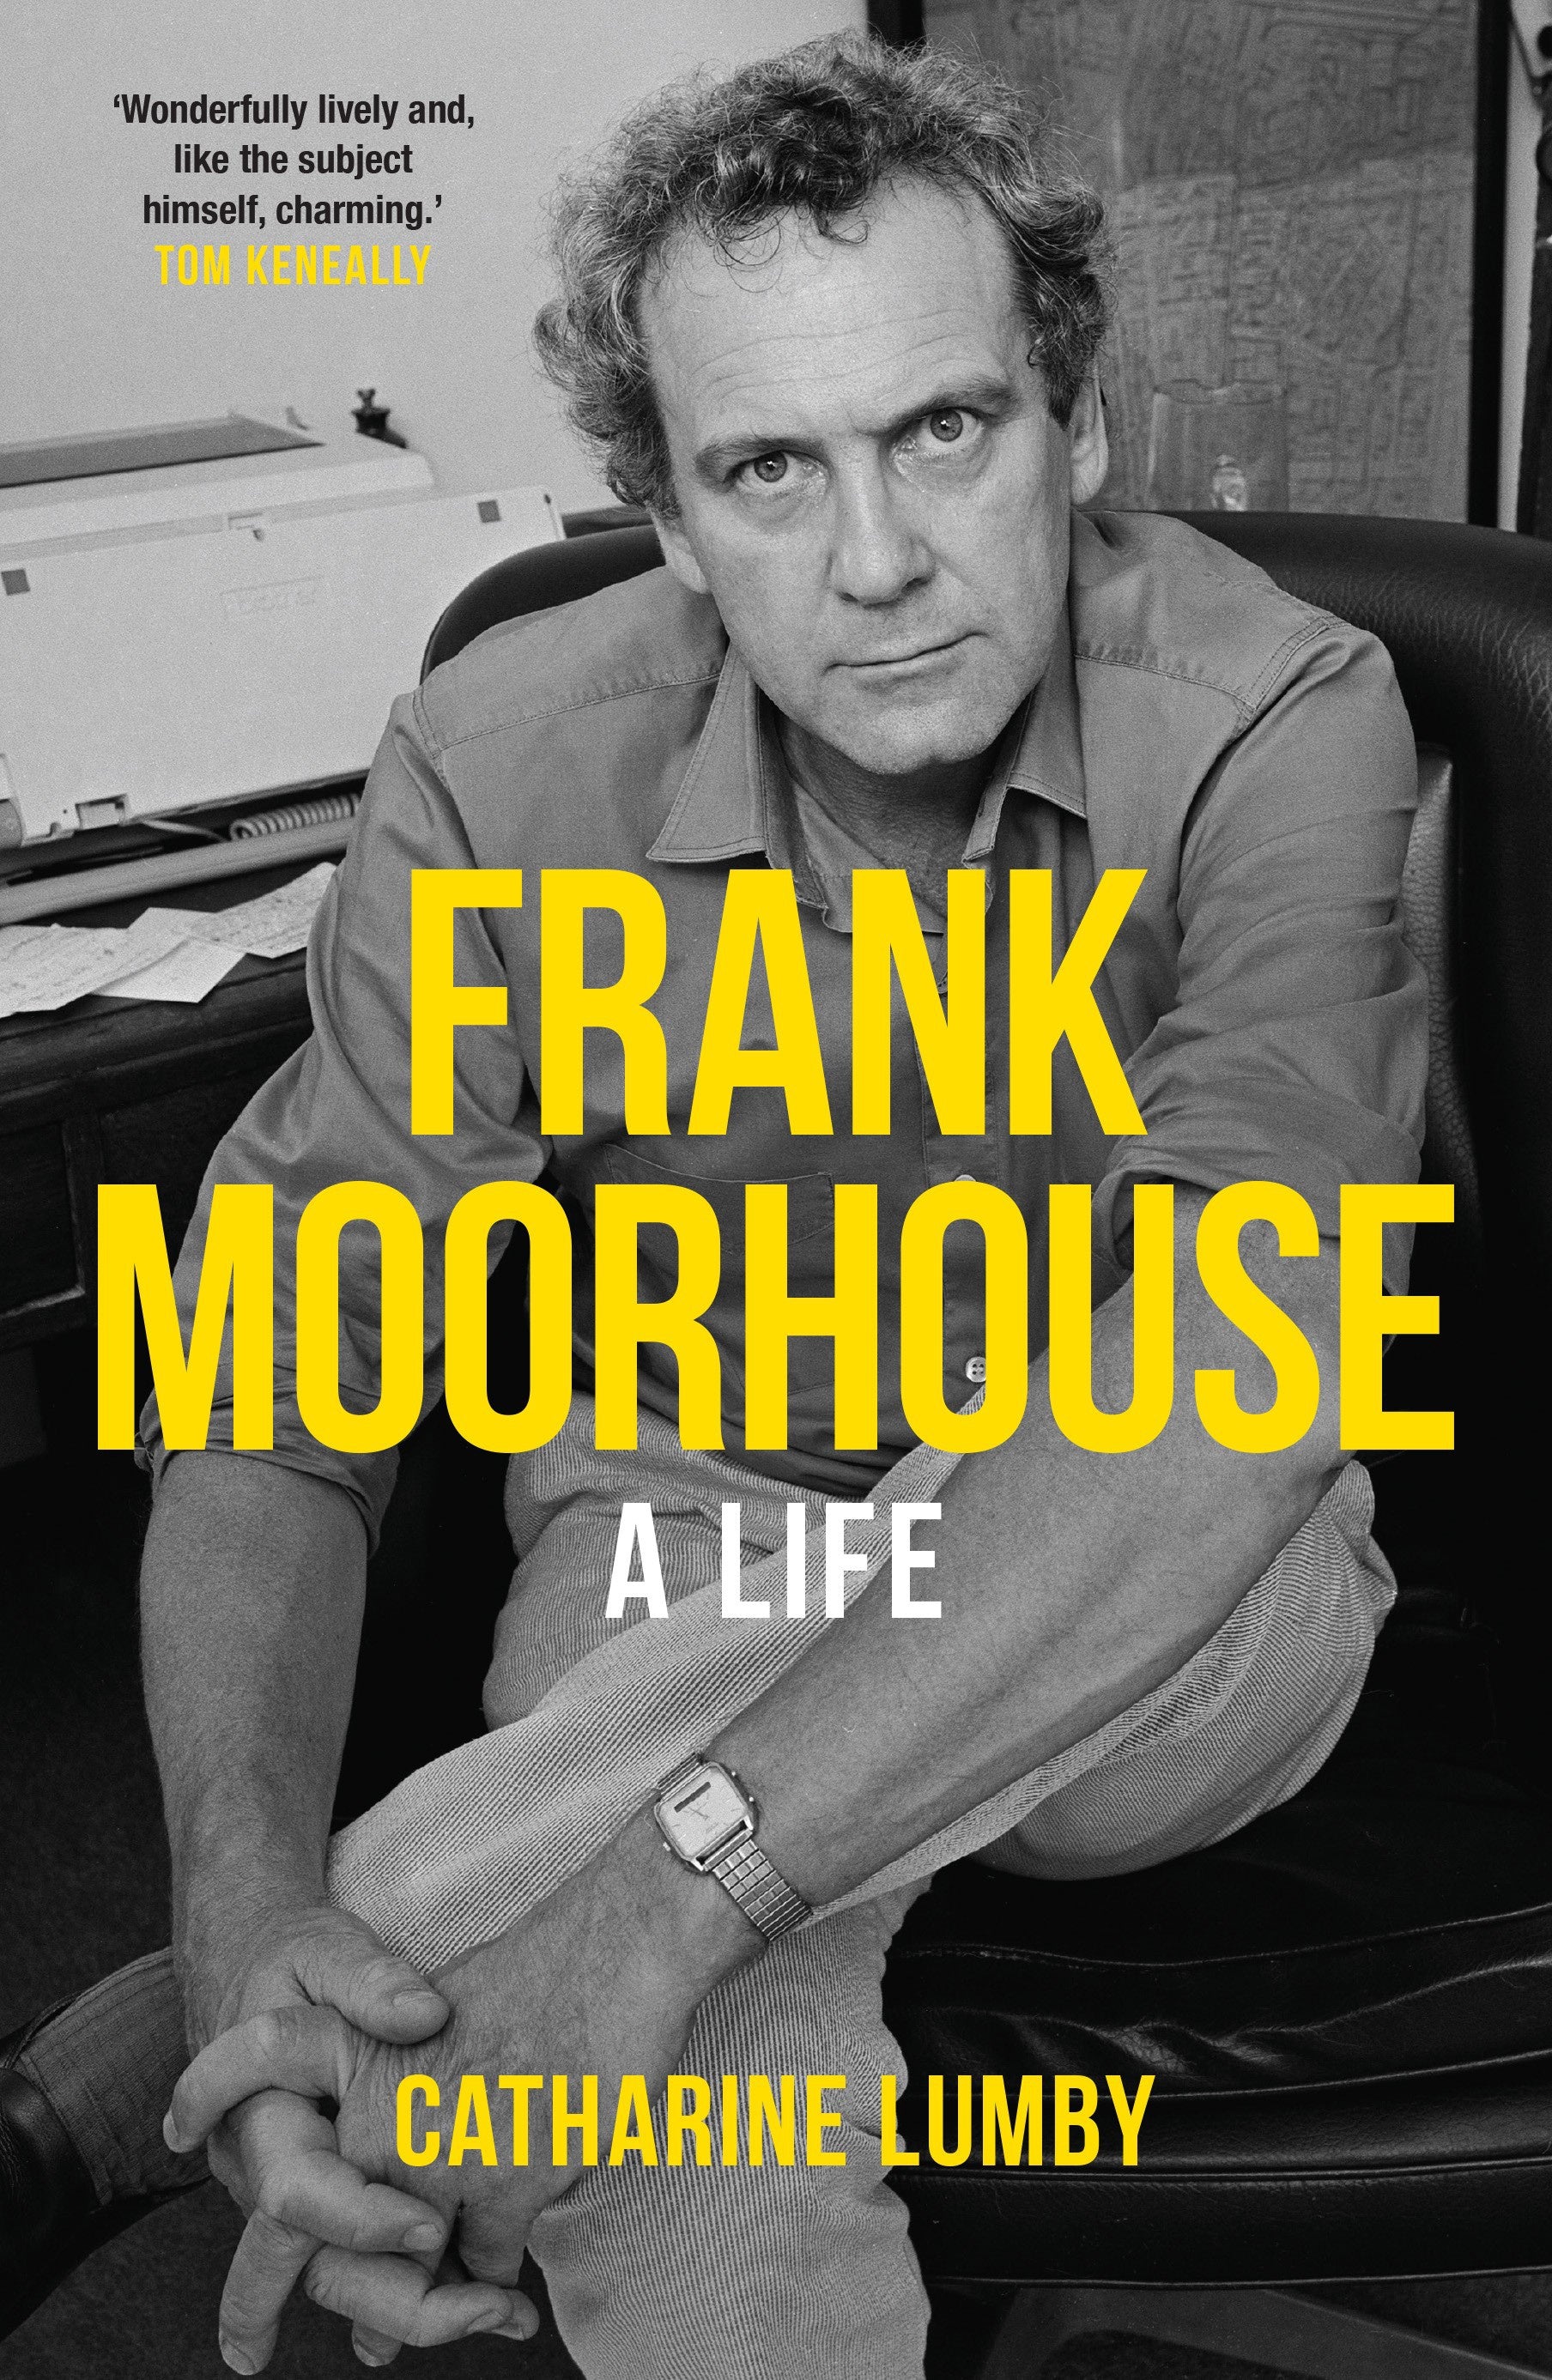 Frank Moorhouse by Catharine Lumby - 9781742372242